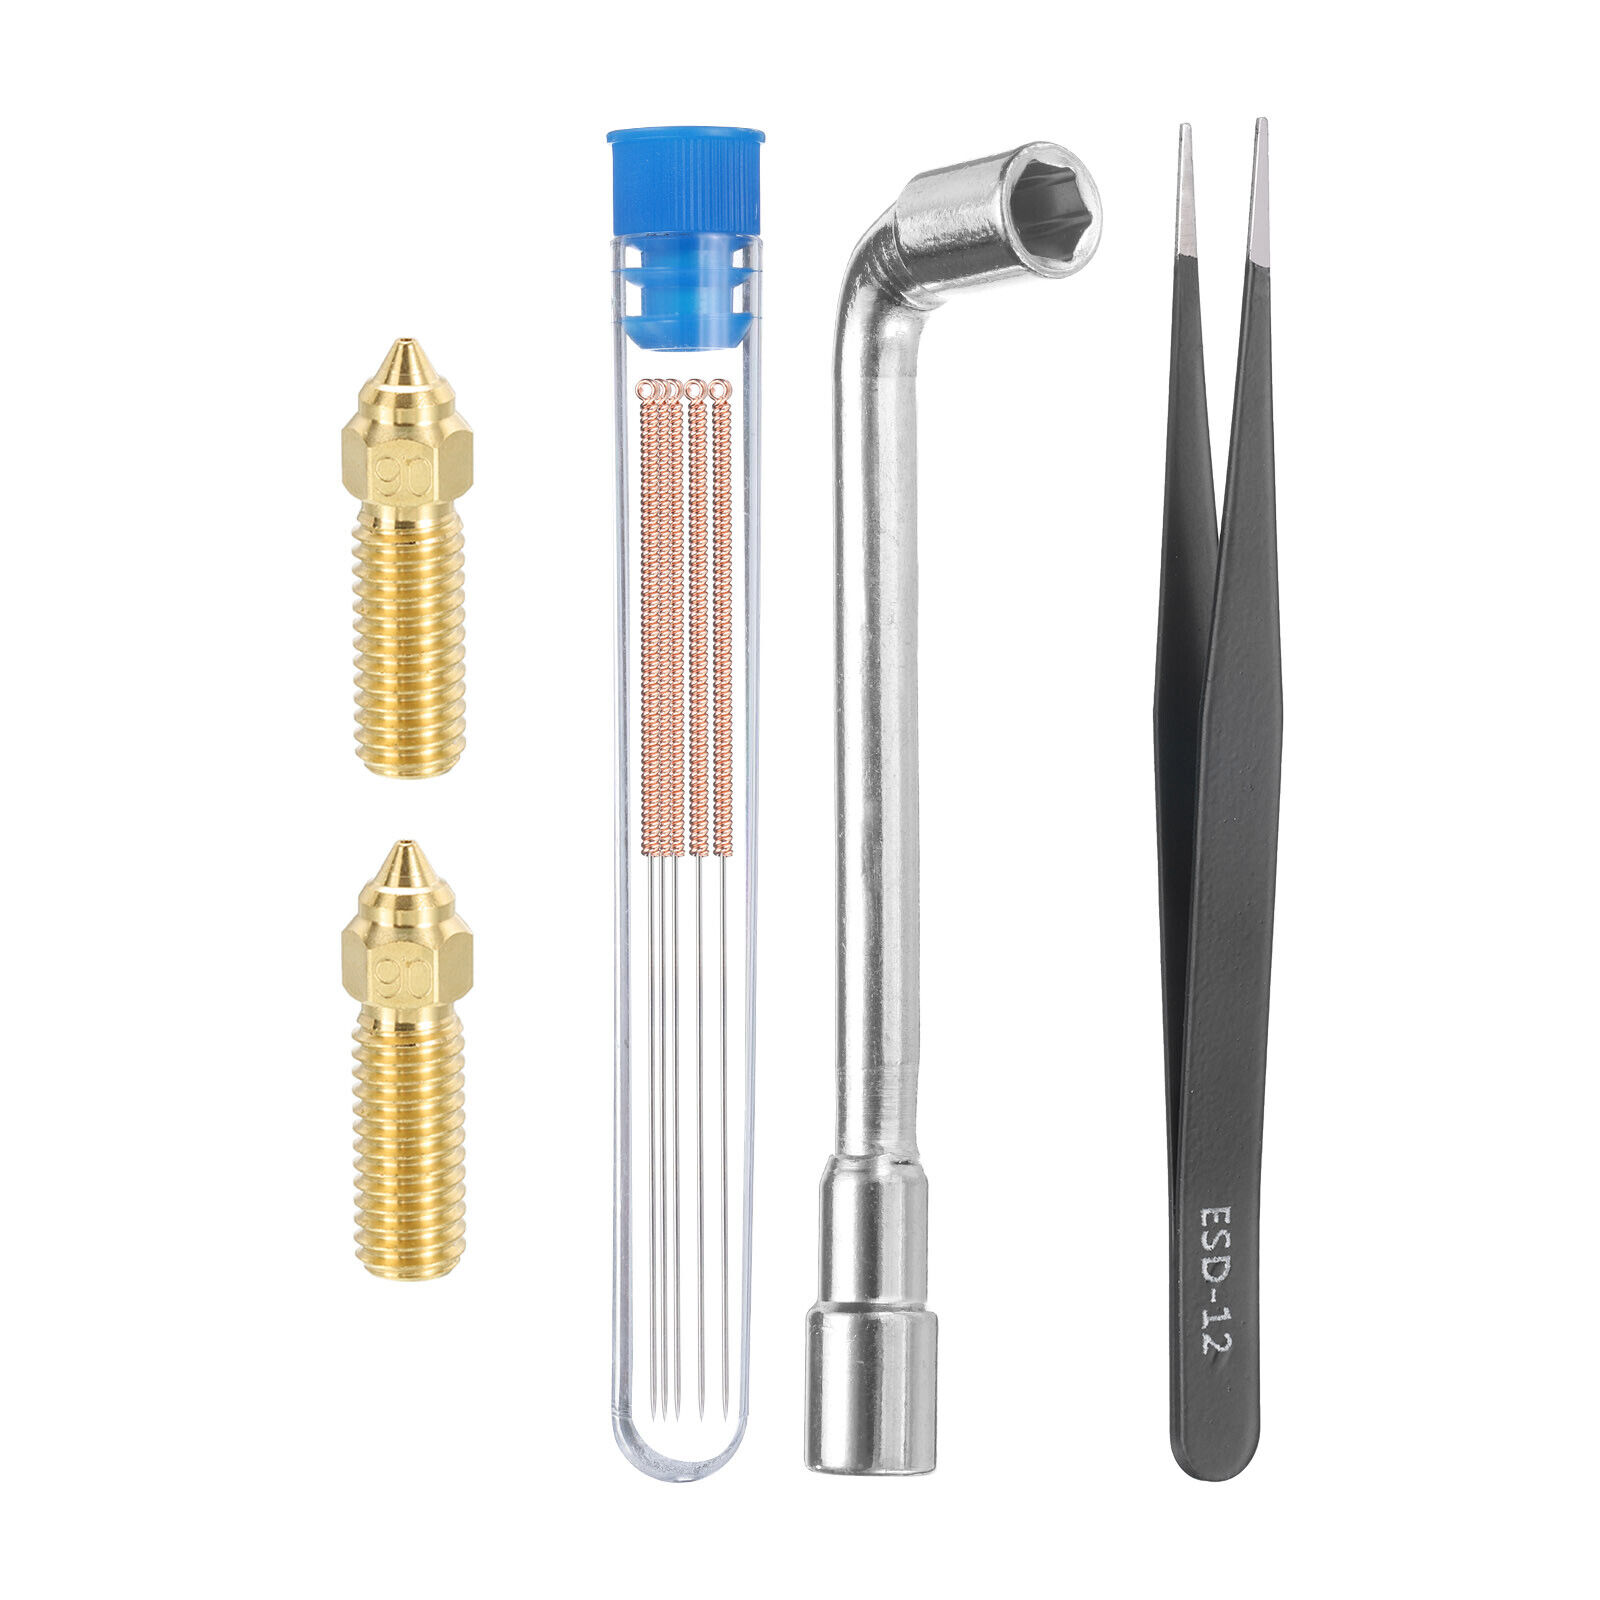 3D Nozzles Kit, 2pcs k1 Copper Alloy Nozzles 0.6mm, Nozzle Cleaning Needles